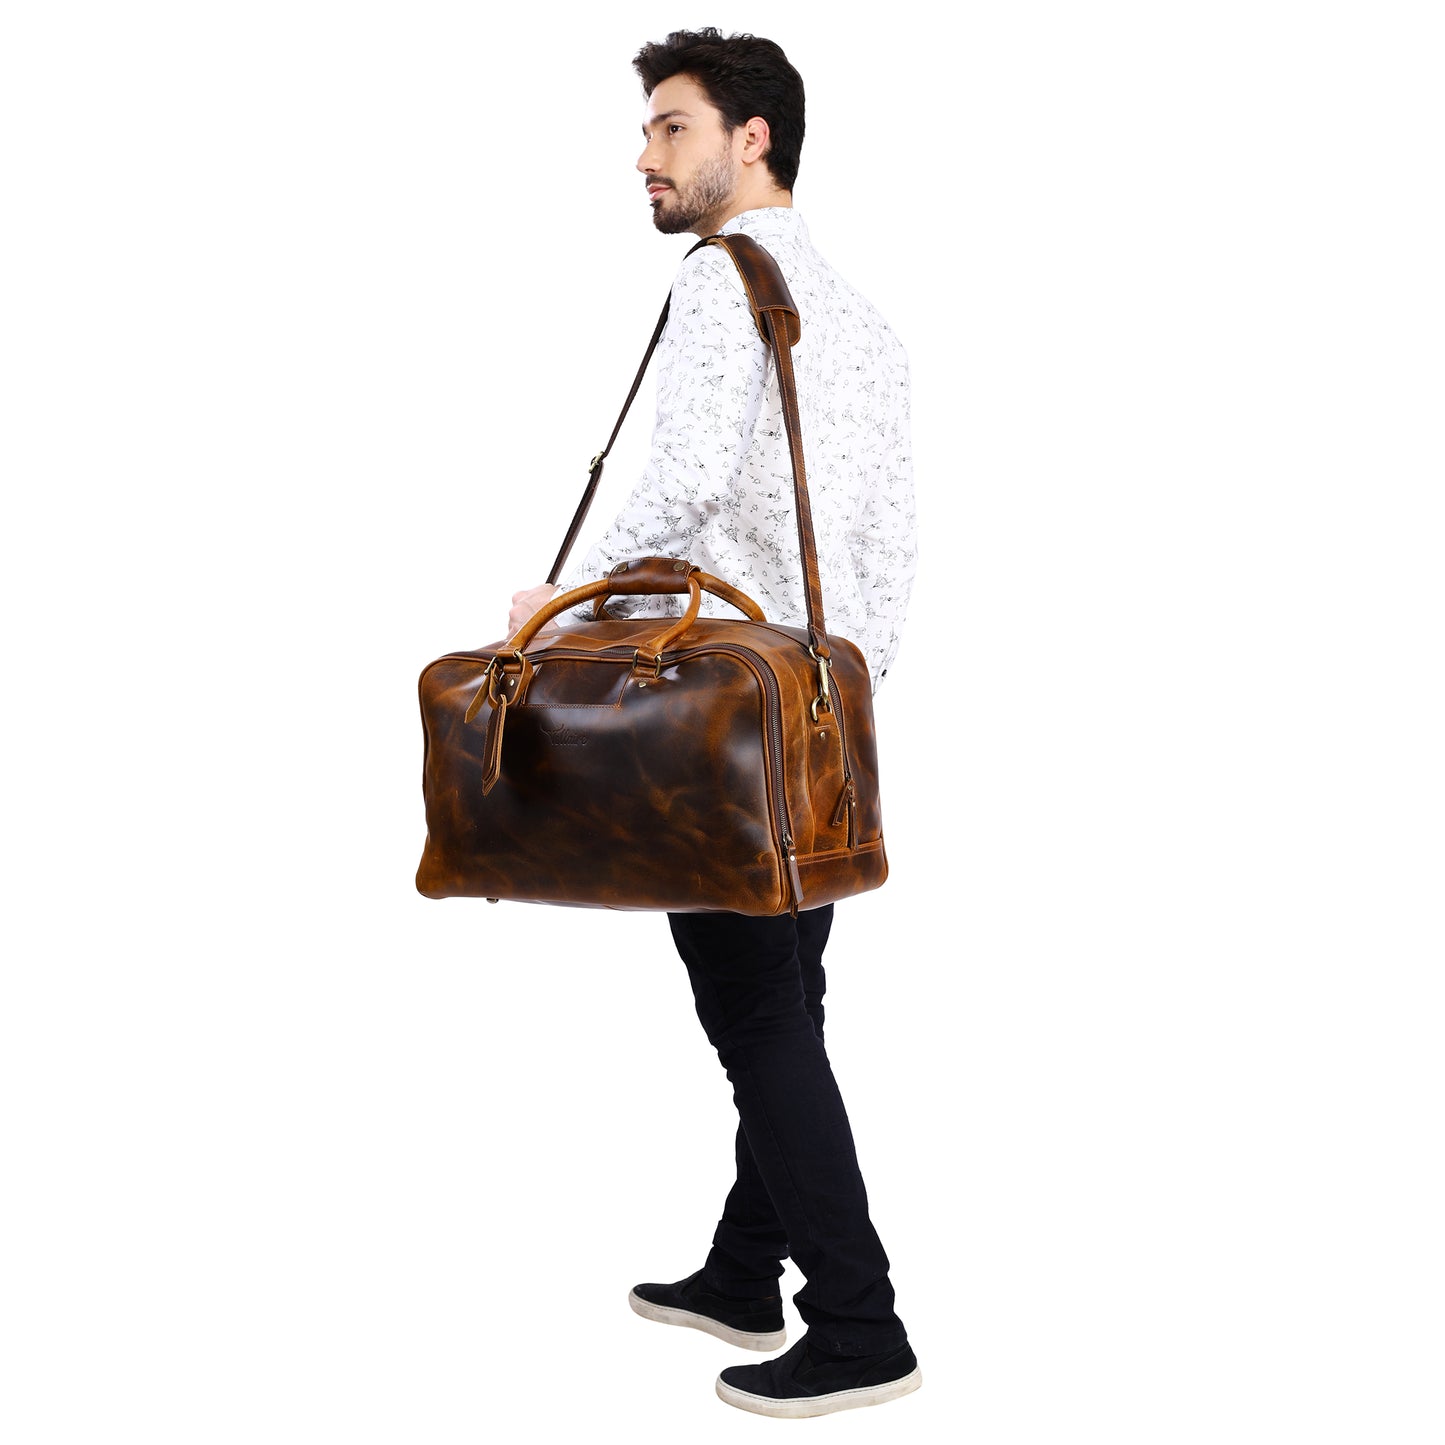 Personalized Leather Travel Bag - XLarge